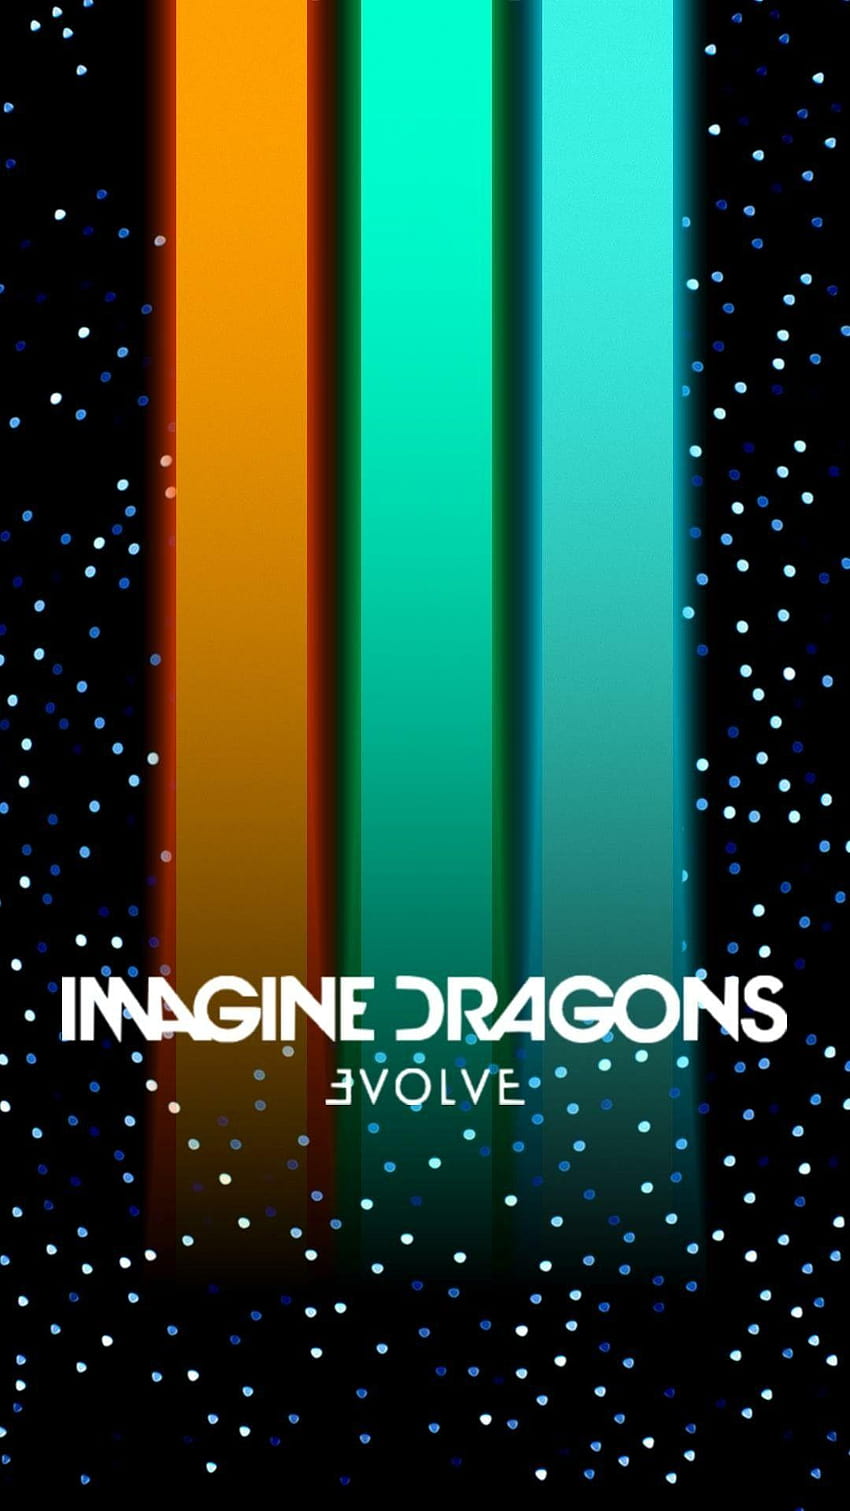 EvolvE, imagine dragons origins HD phone wallpaper